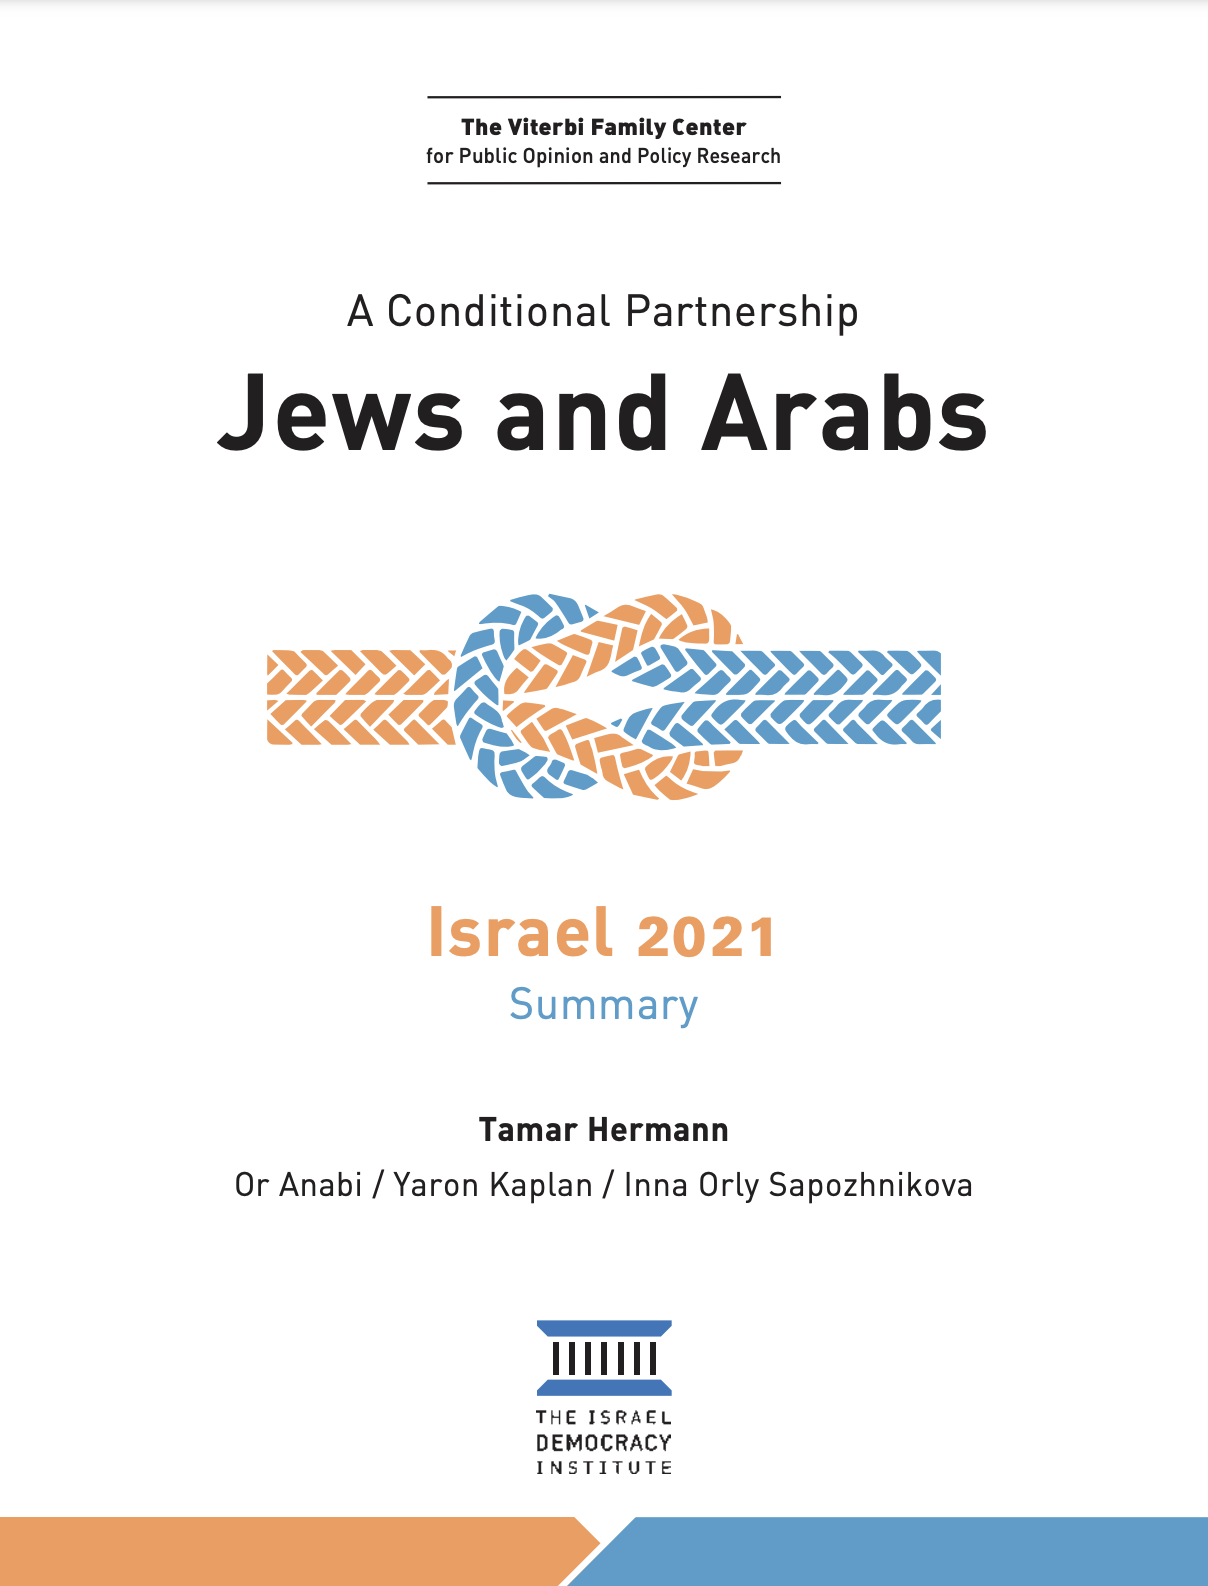 Tamar Hermann, et.al “A Conditional Partnership Jews and Arabs,” Israel Democracy Institute, June 2022